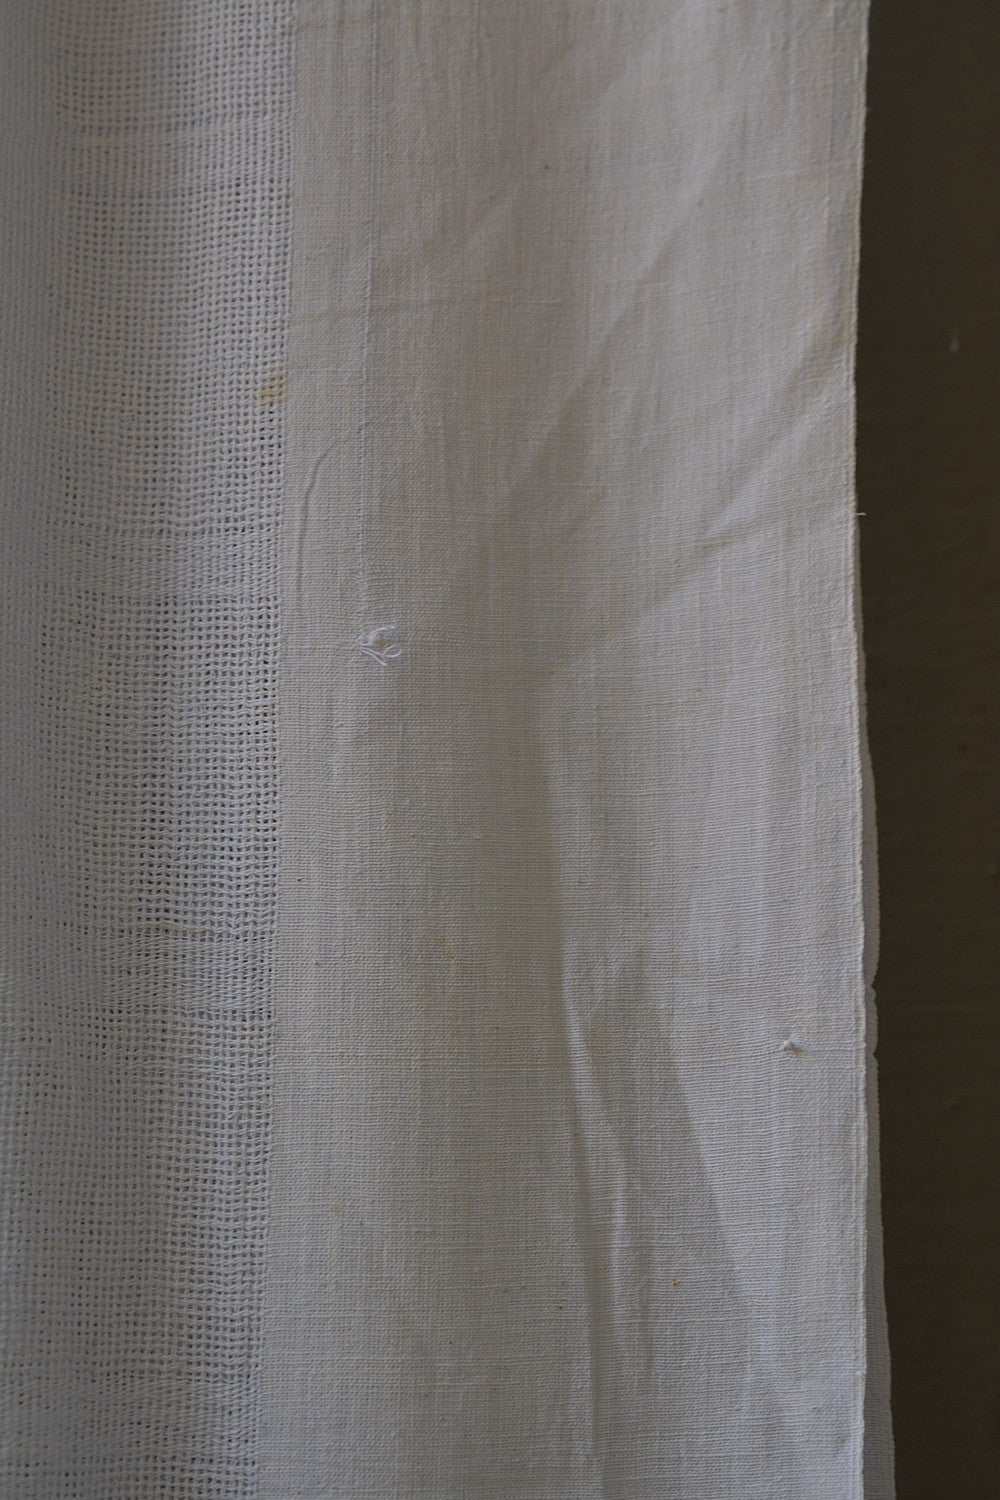 Mosquito net cotton fabric - metaphorracha